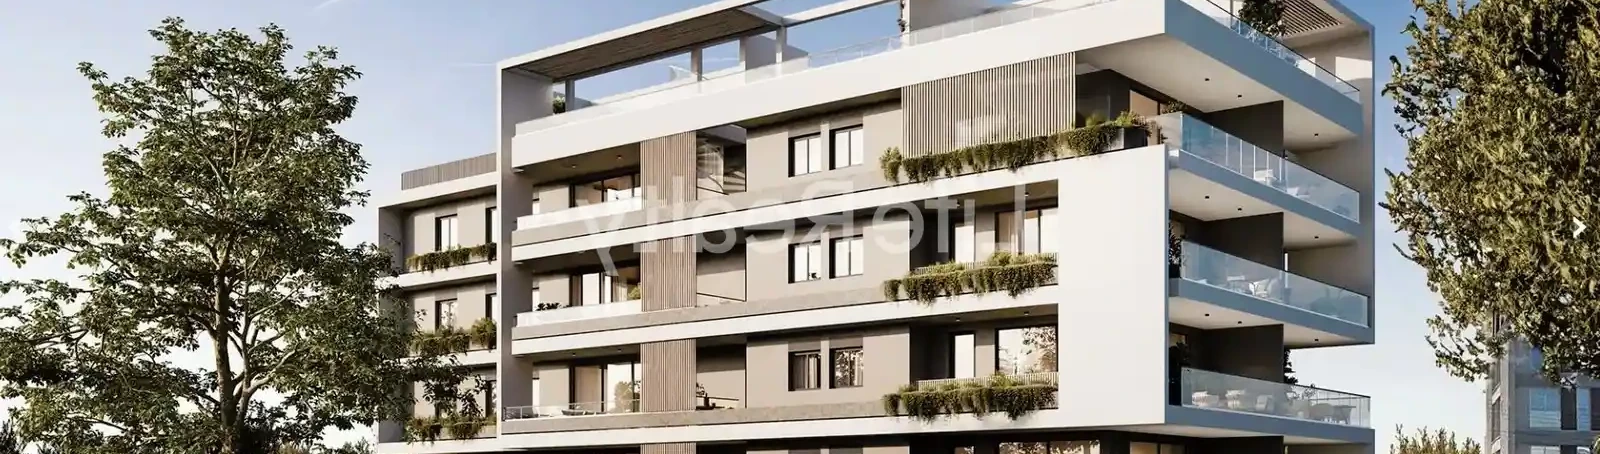 3-bedroom penthouse fоr sаle €745.000, image 1